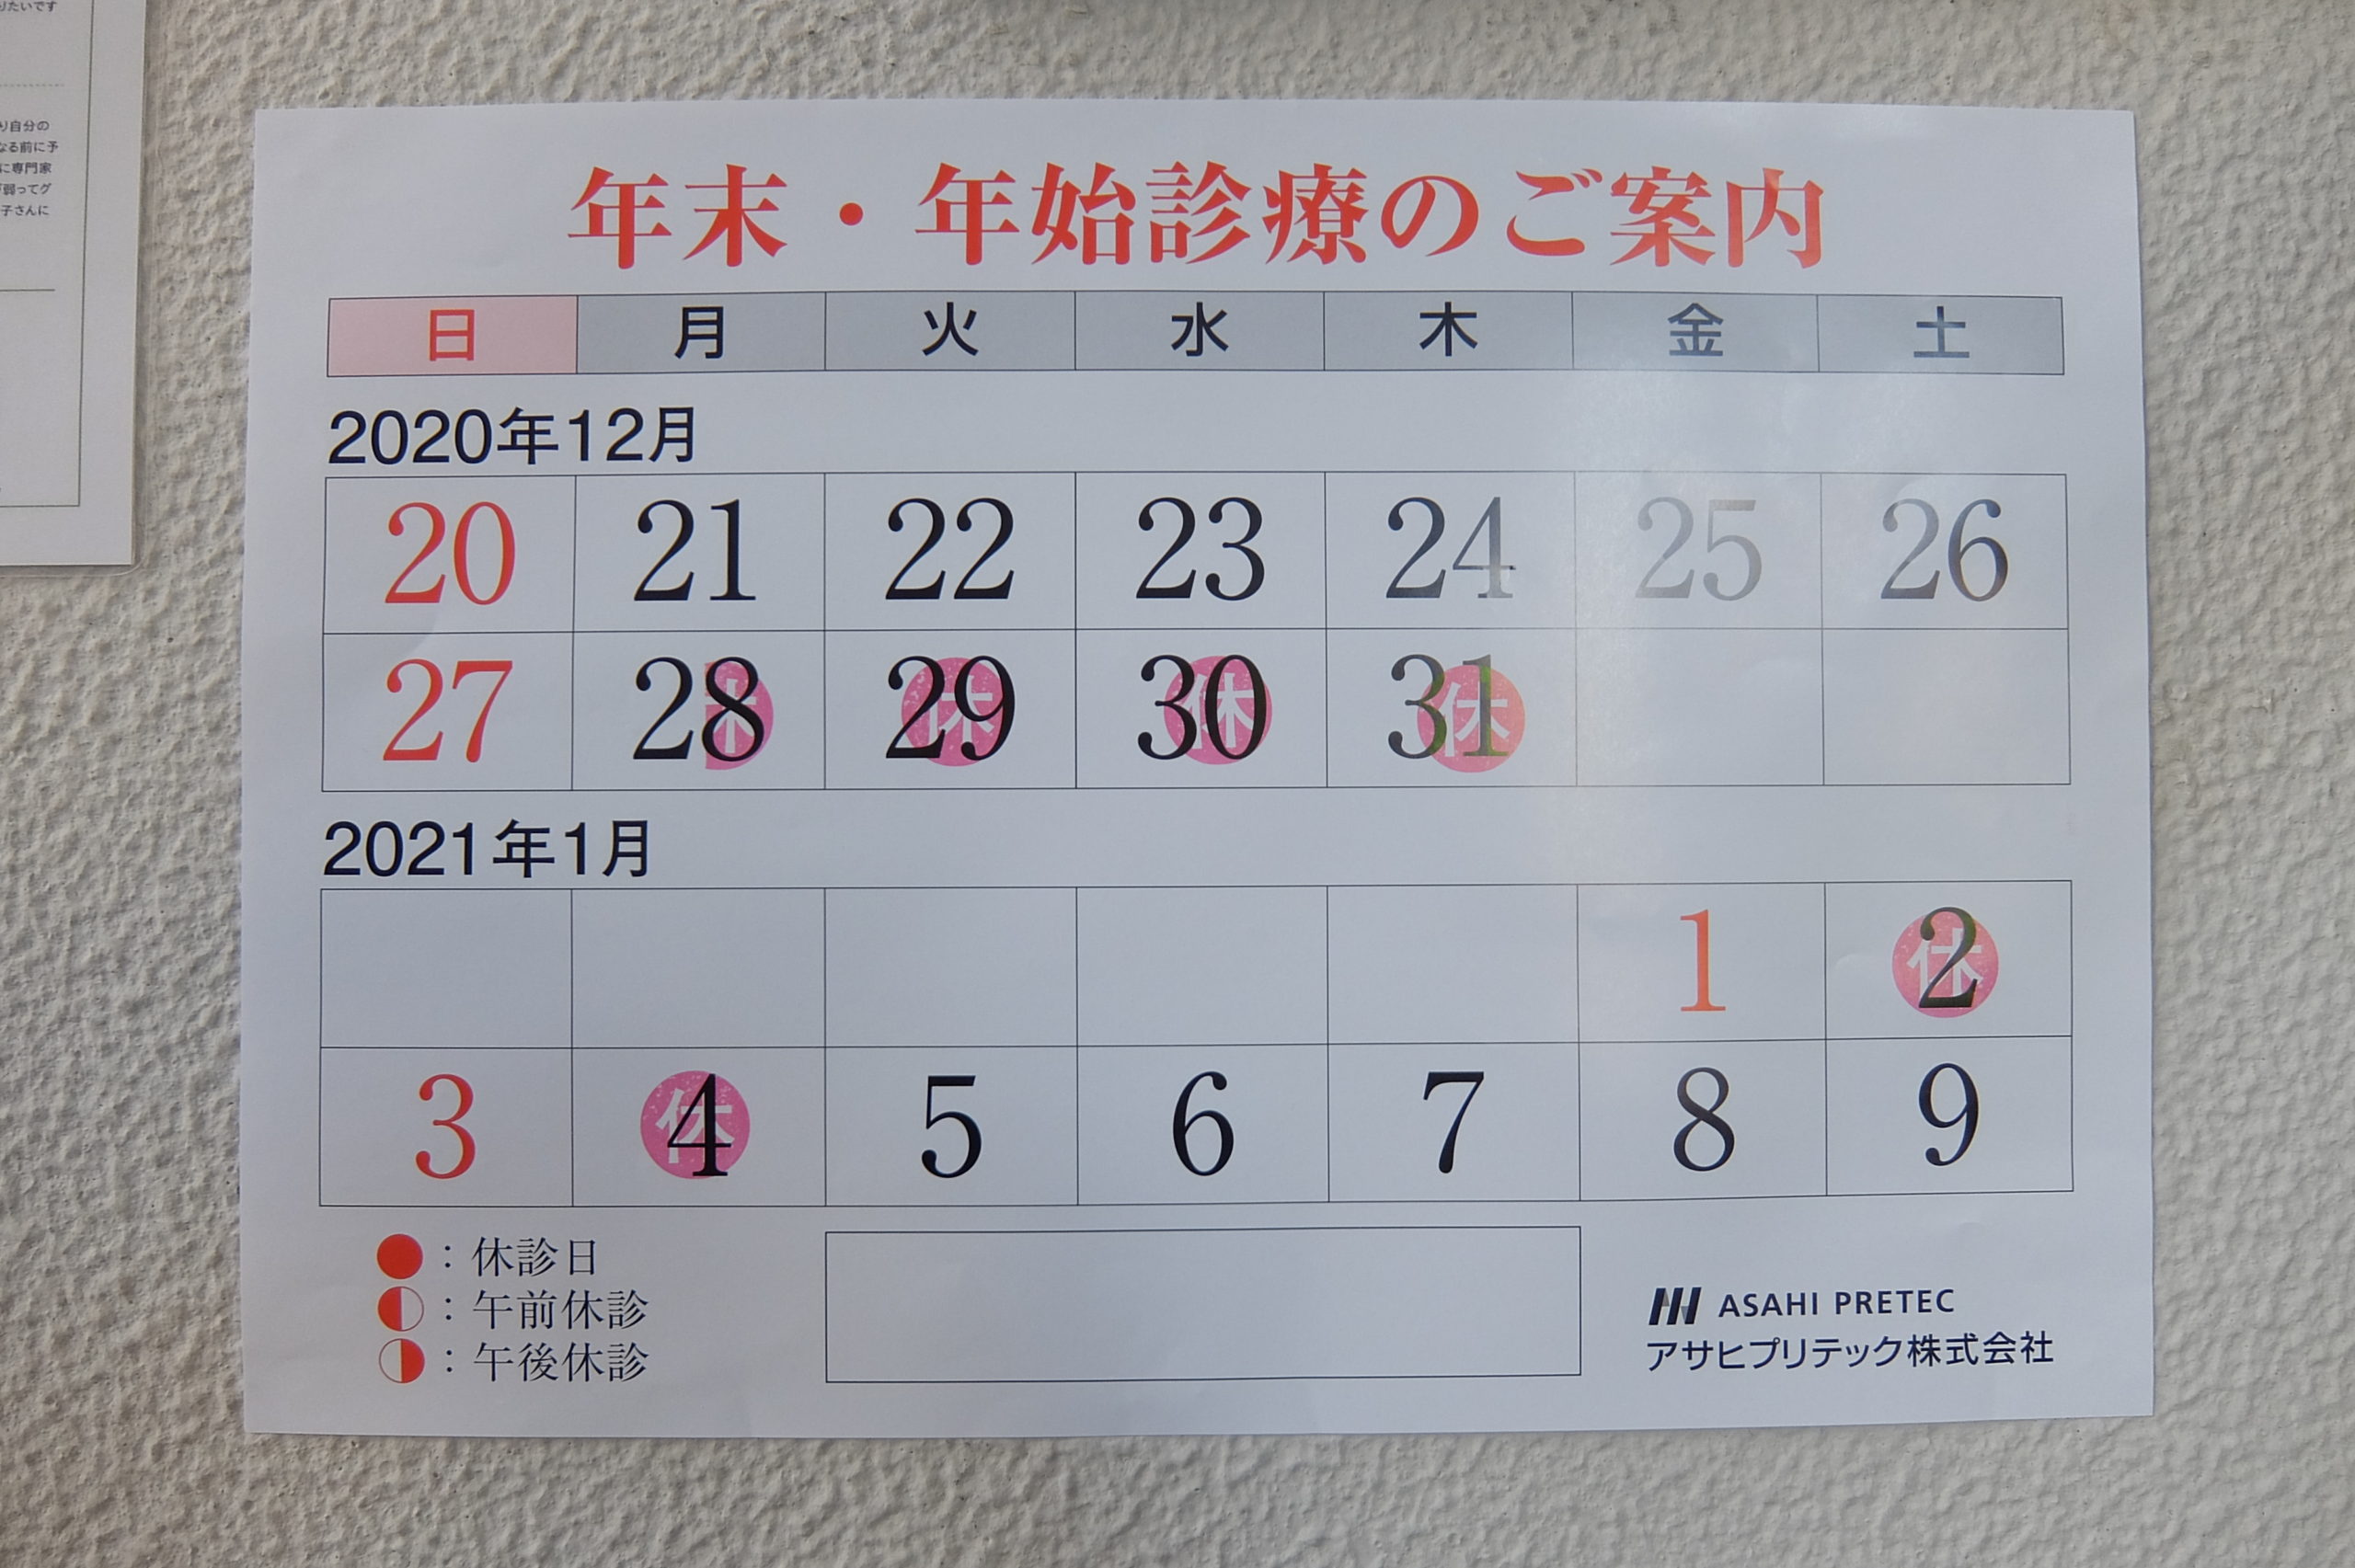 2020-2021 calendar